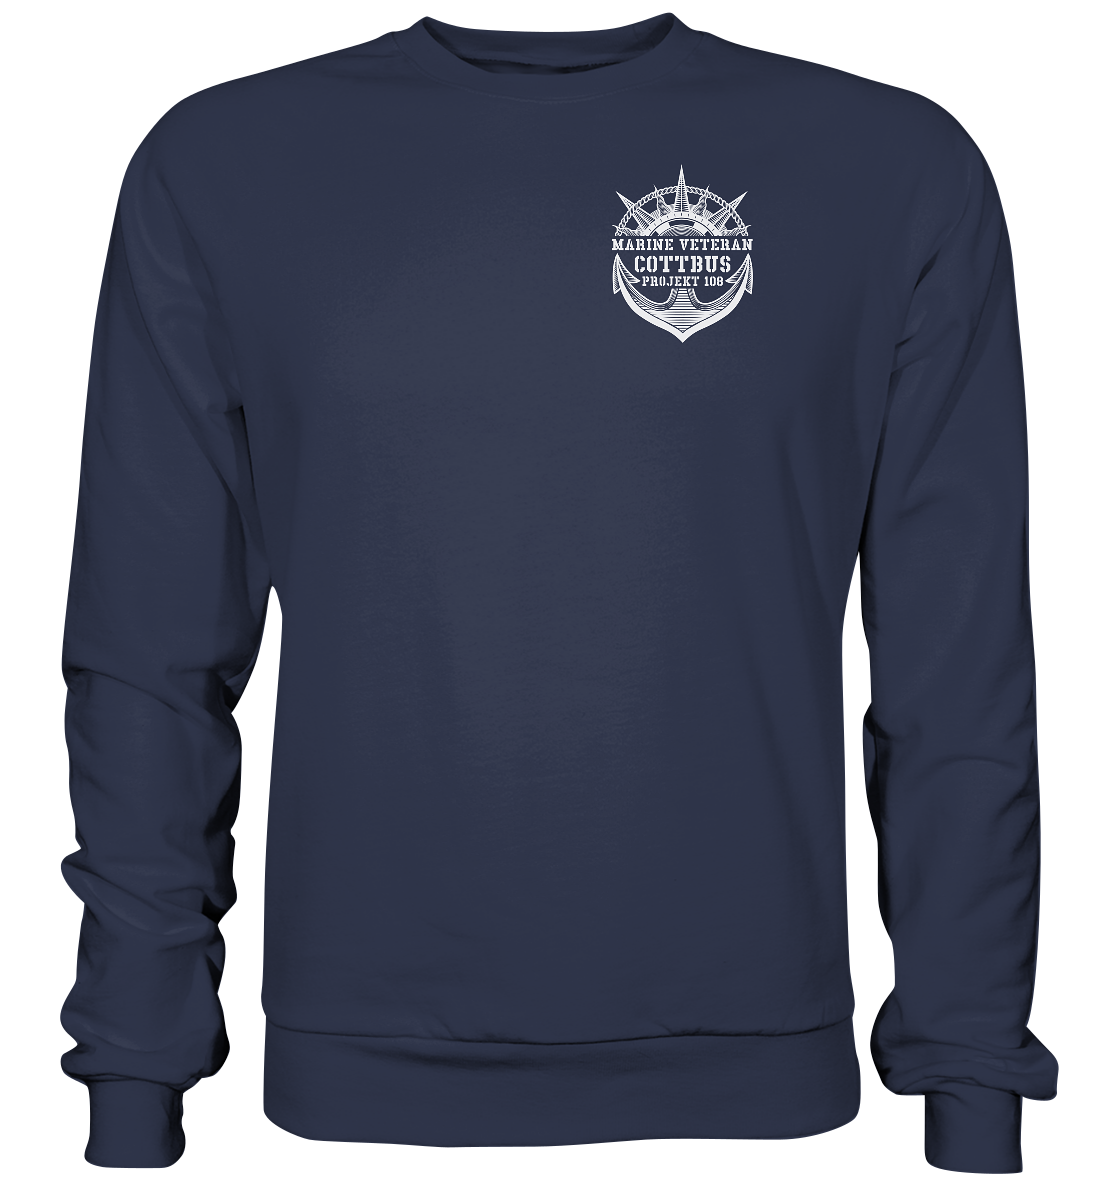 Projekt 108 COTTBUS Marine Veteran Brustlogo - Premium Sweatshirt